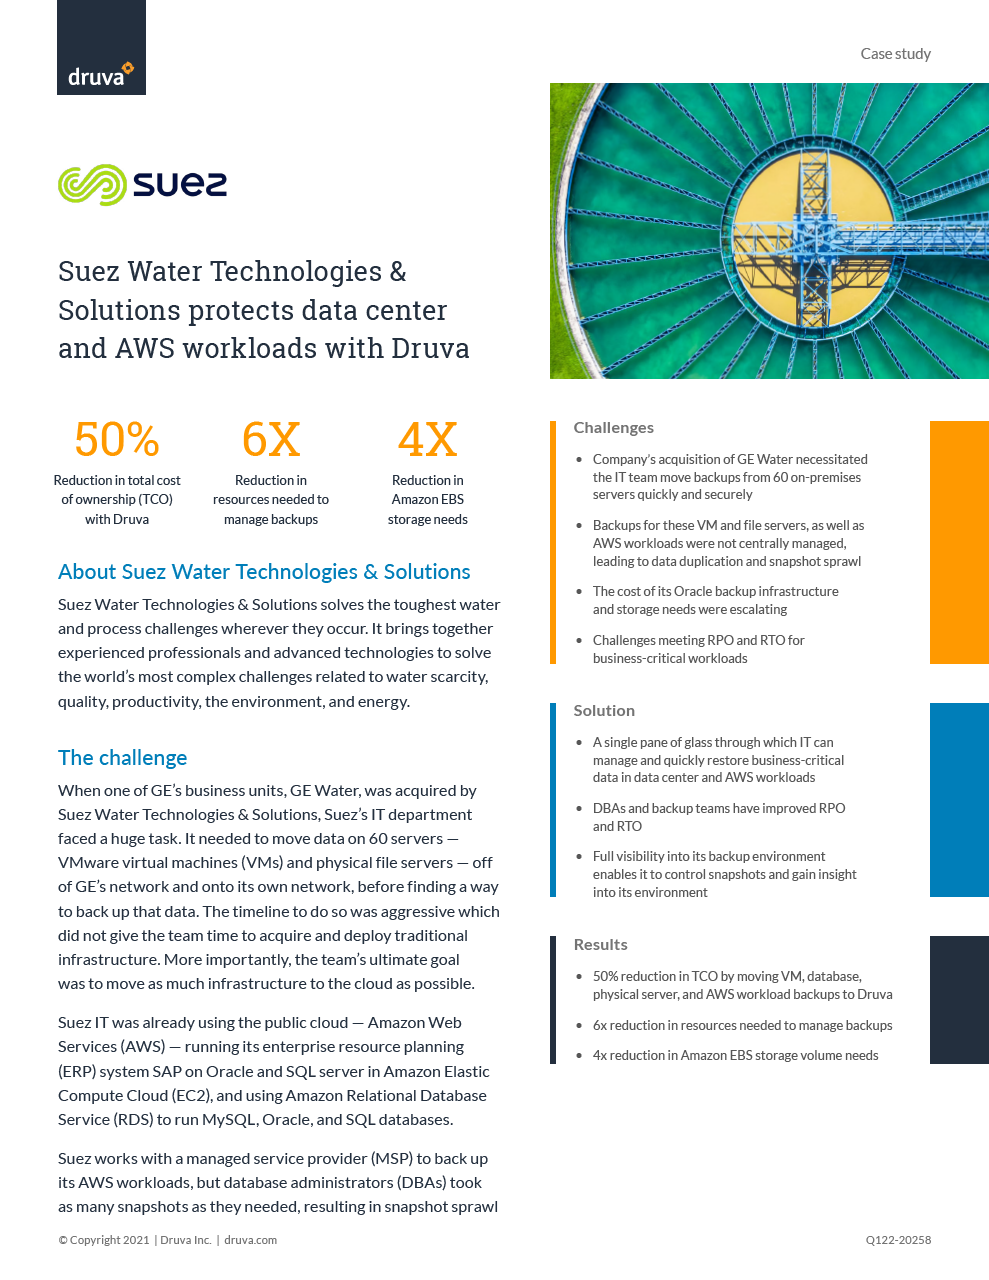 Suez protects data center, AWS workloads with Druva